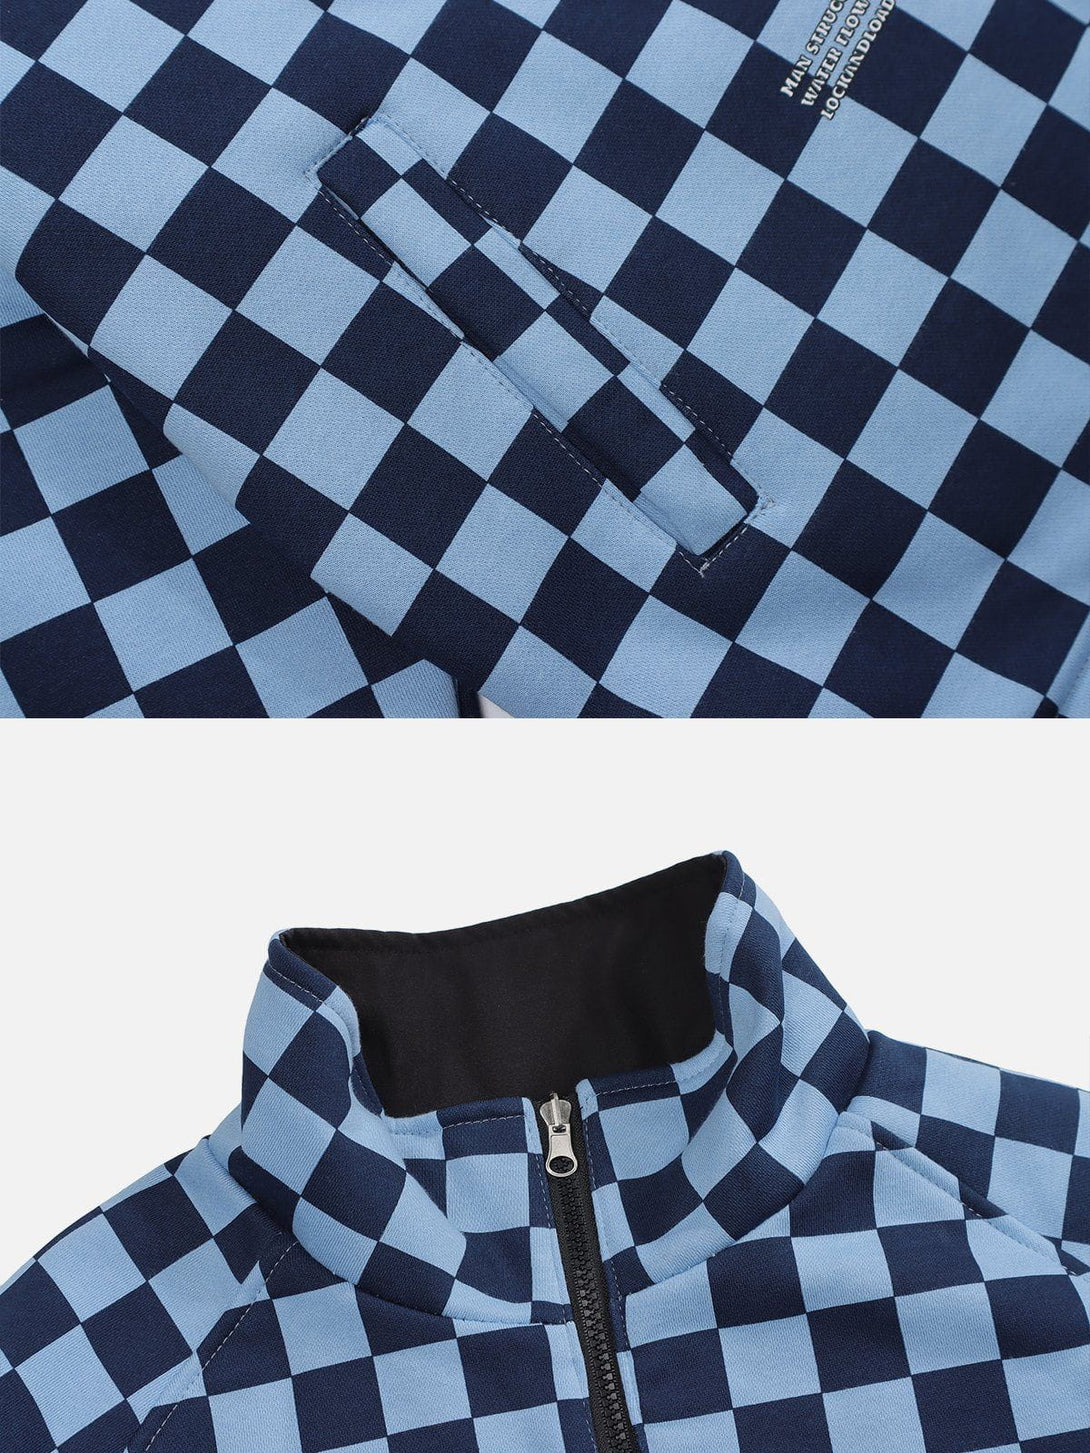 Majesda® - Reversible Checkerboard Jacket outfit ideas, streetwear fashion - majesda.com